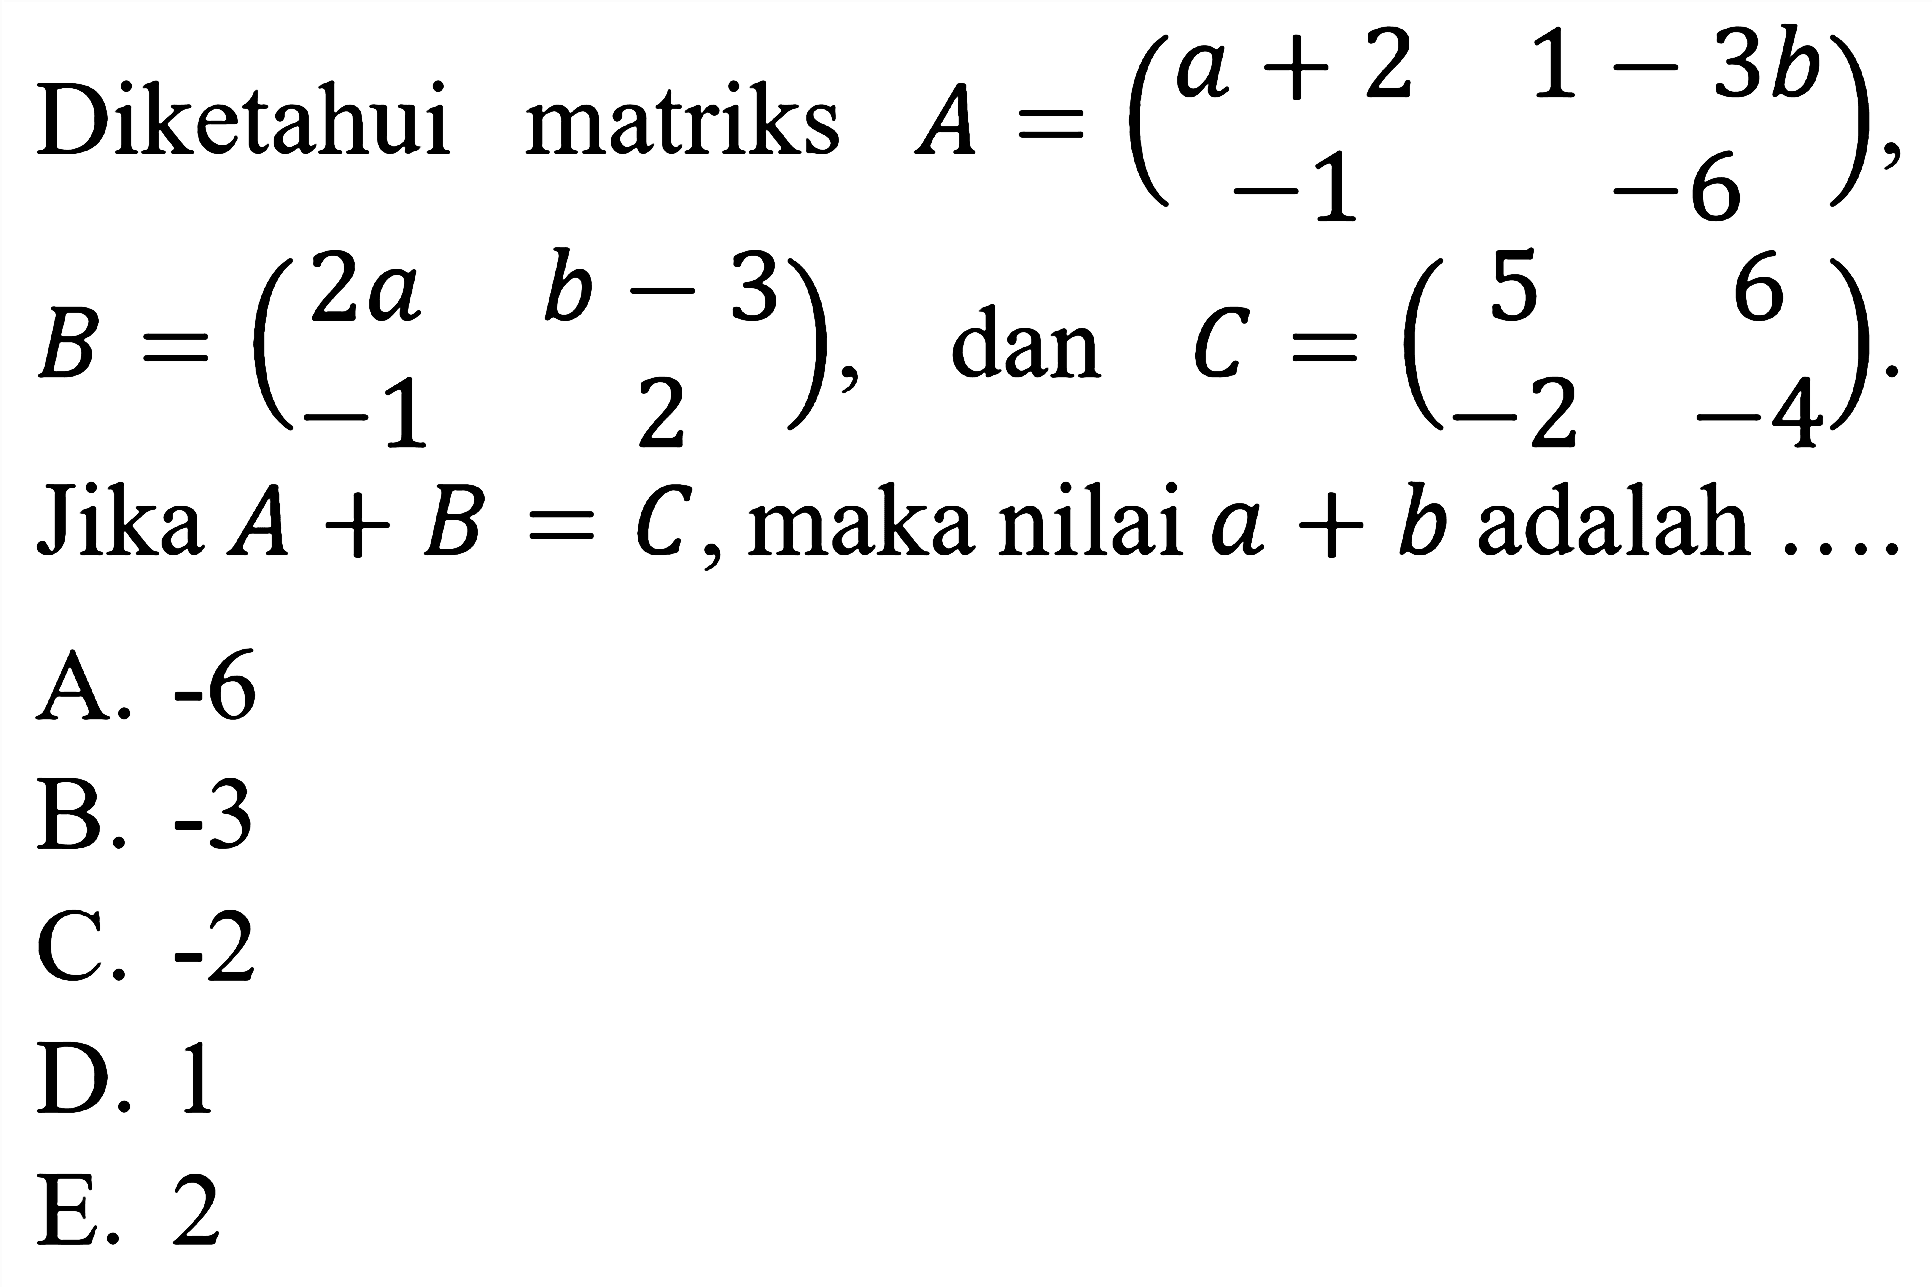 Diketahui matriks  A=(a+2  1-3 b  -1  -6), B=(2 a  b-3  -1  2), dan  C=(5  6  -2  -4)  Jika  A+B=C, maka nilai  a+b  adalah  ... . 